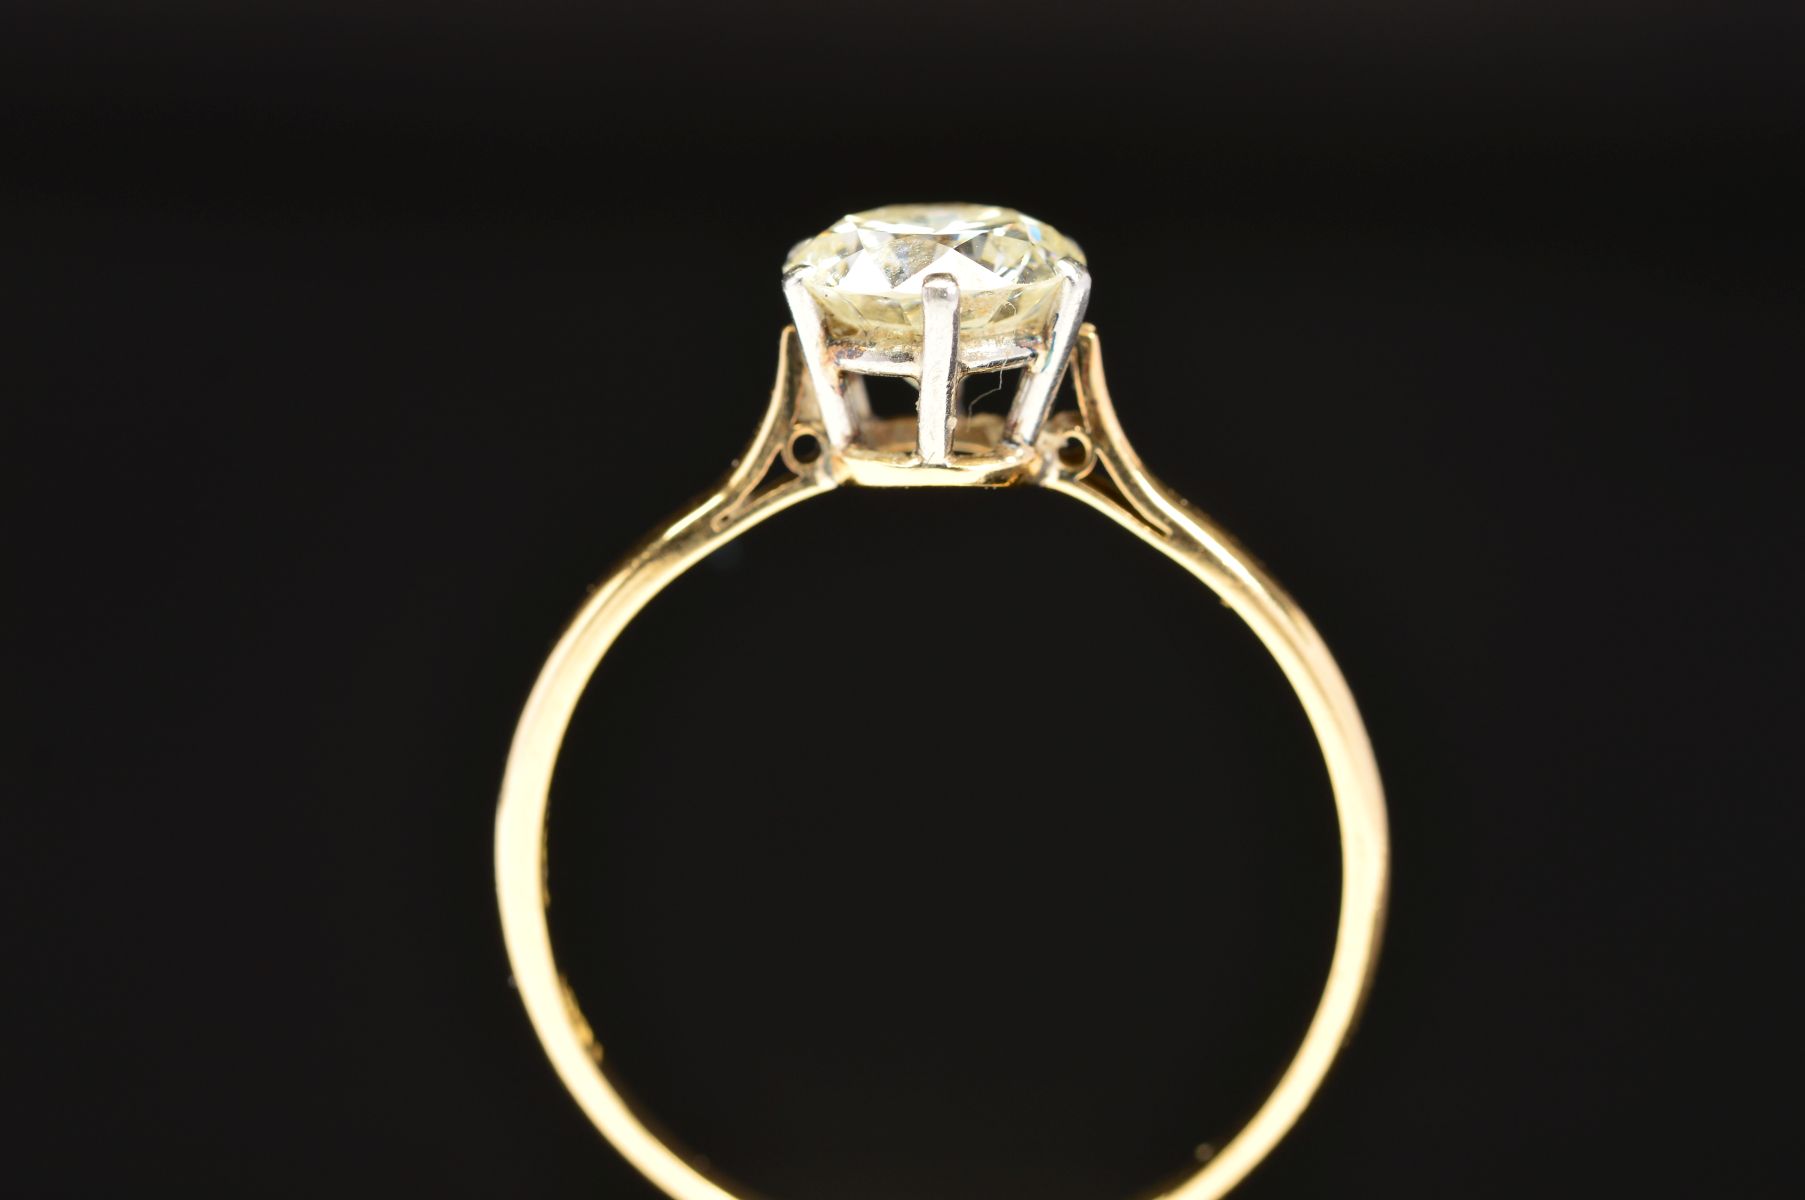 A MODERN SINGLE STONE DIAMOND RING, estimated modern round brilliant cut diamond weight 1.50ct, - Image 5 of 5